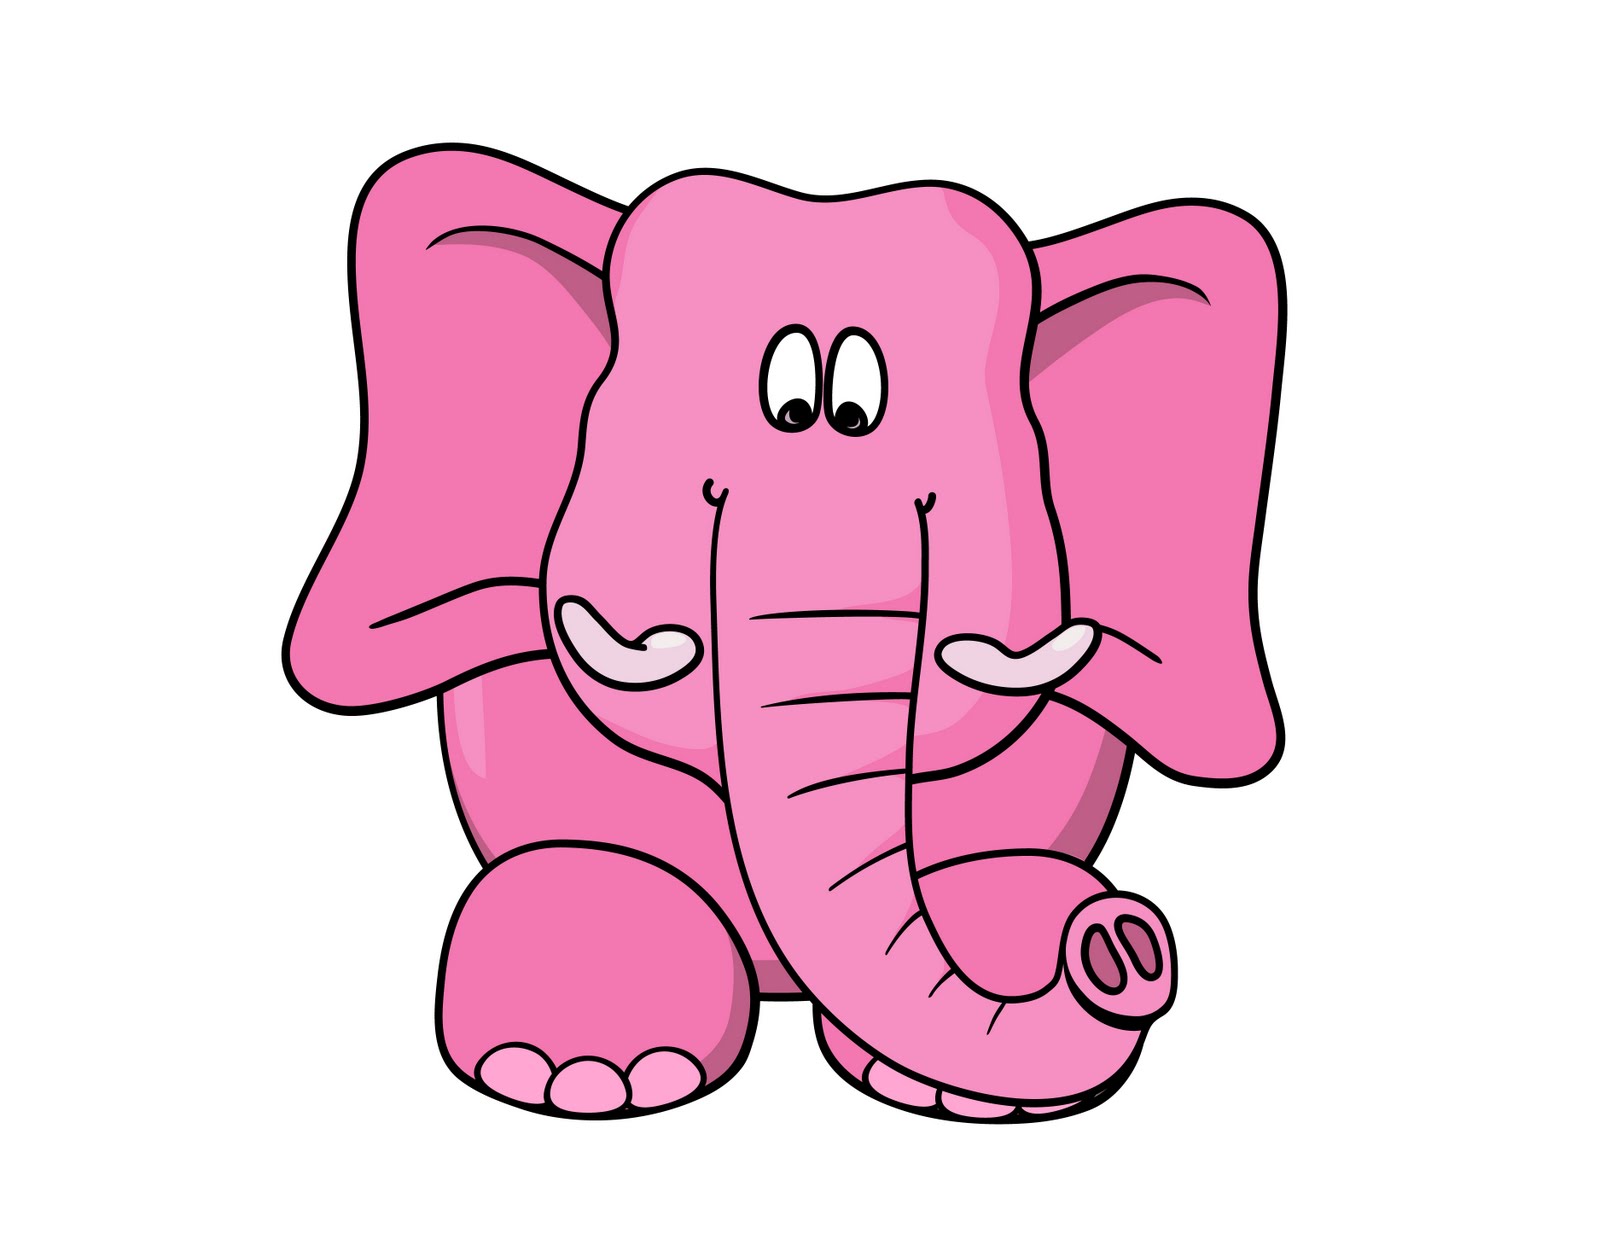 Cute Elephant Cartoon Drawing - ClipArt Best - ClipArt Best